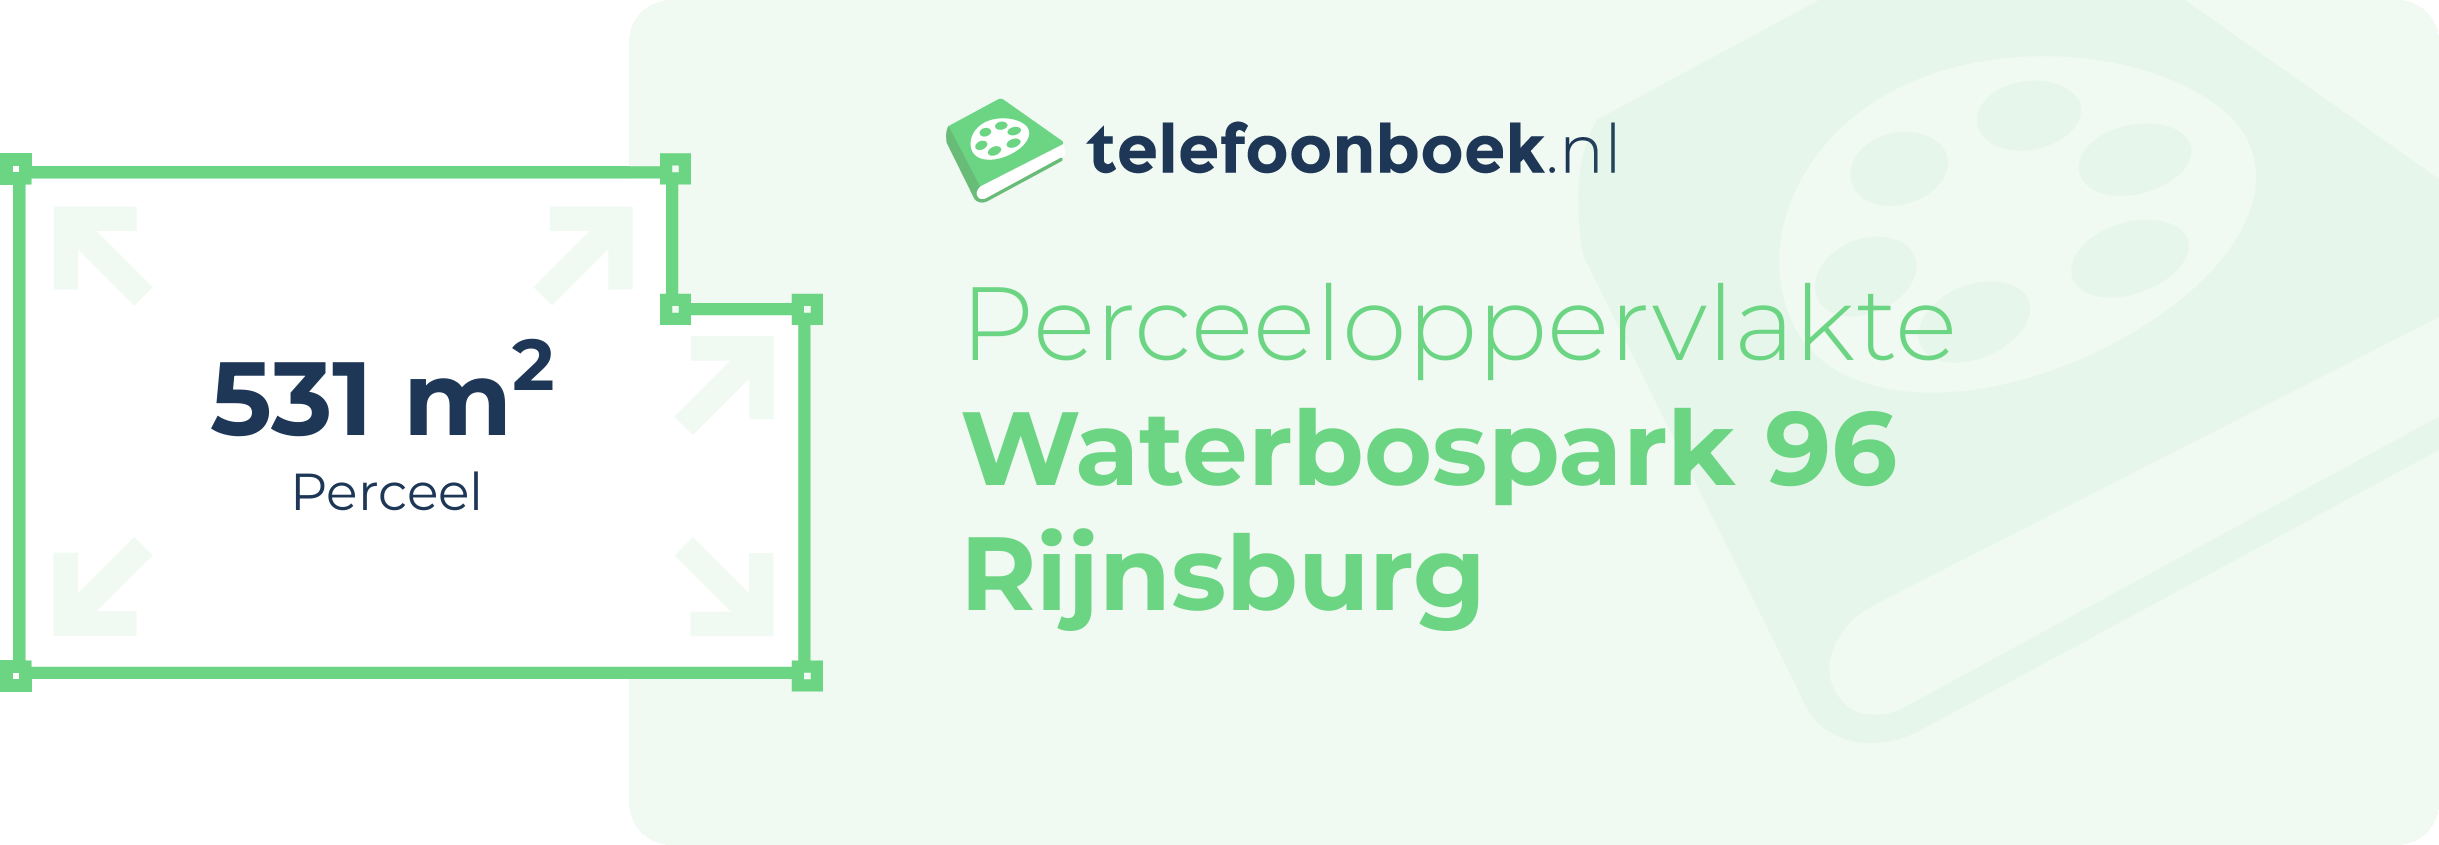 Perceeloppervlakte Waterbospark 96 Rijnsburg